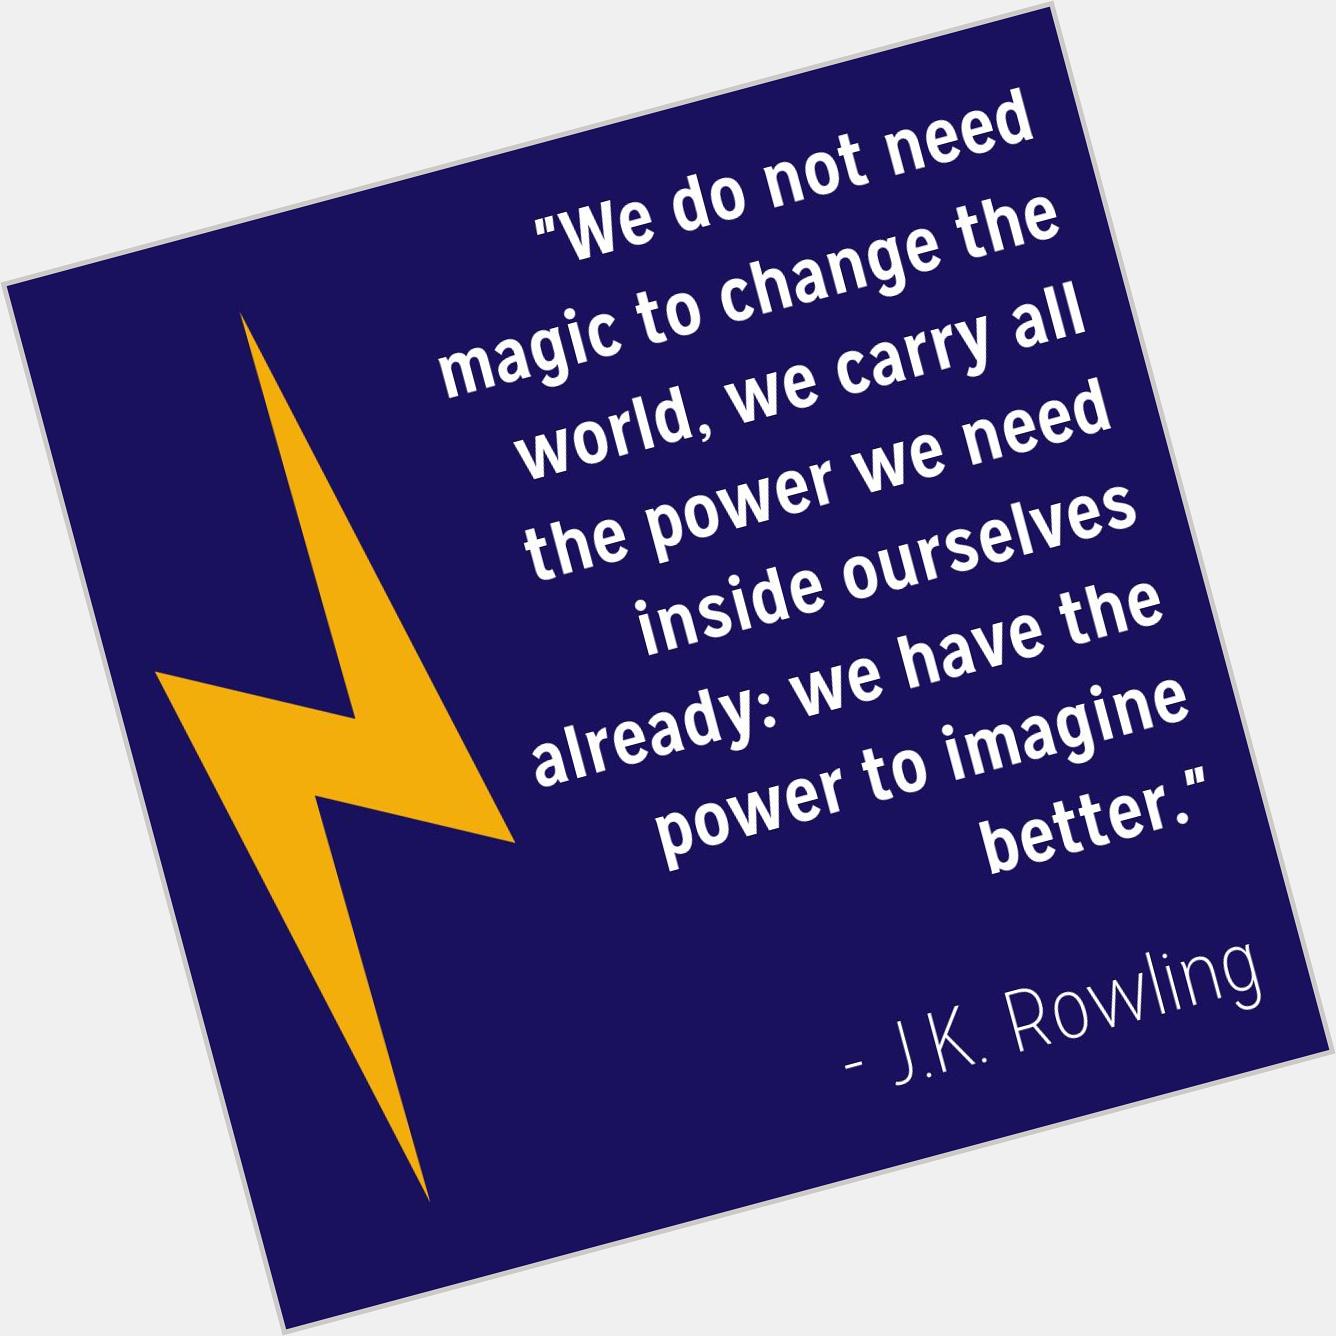 Happy birthday to J.K. Rowling & Harry Potter! 